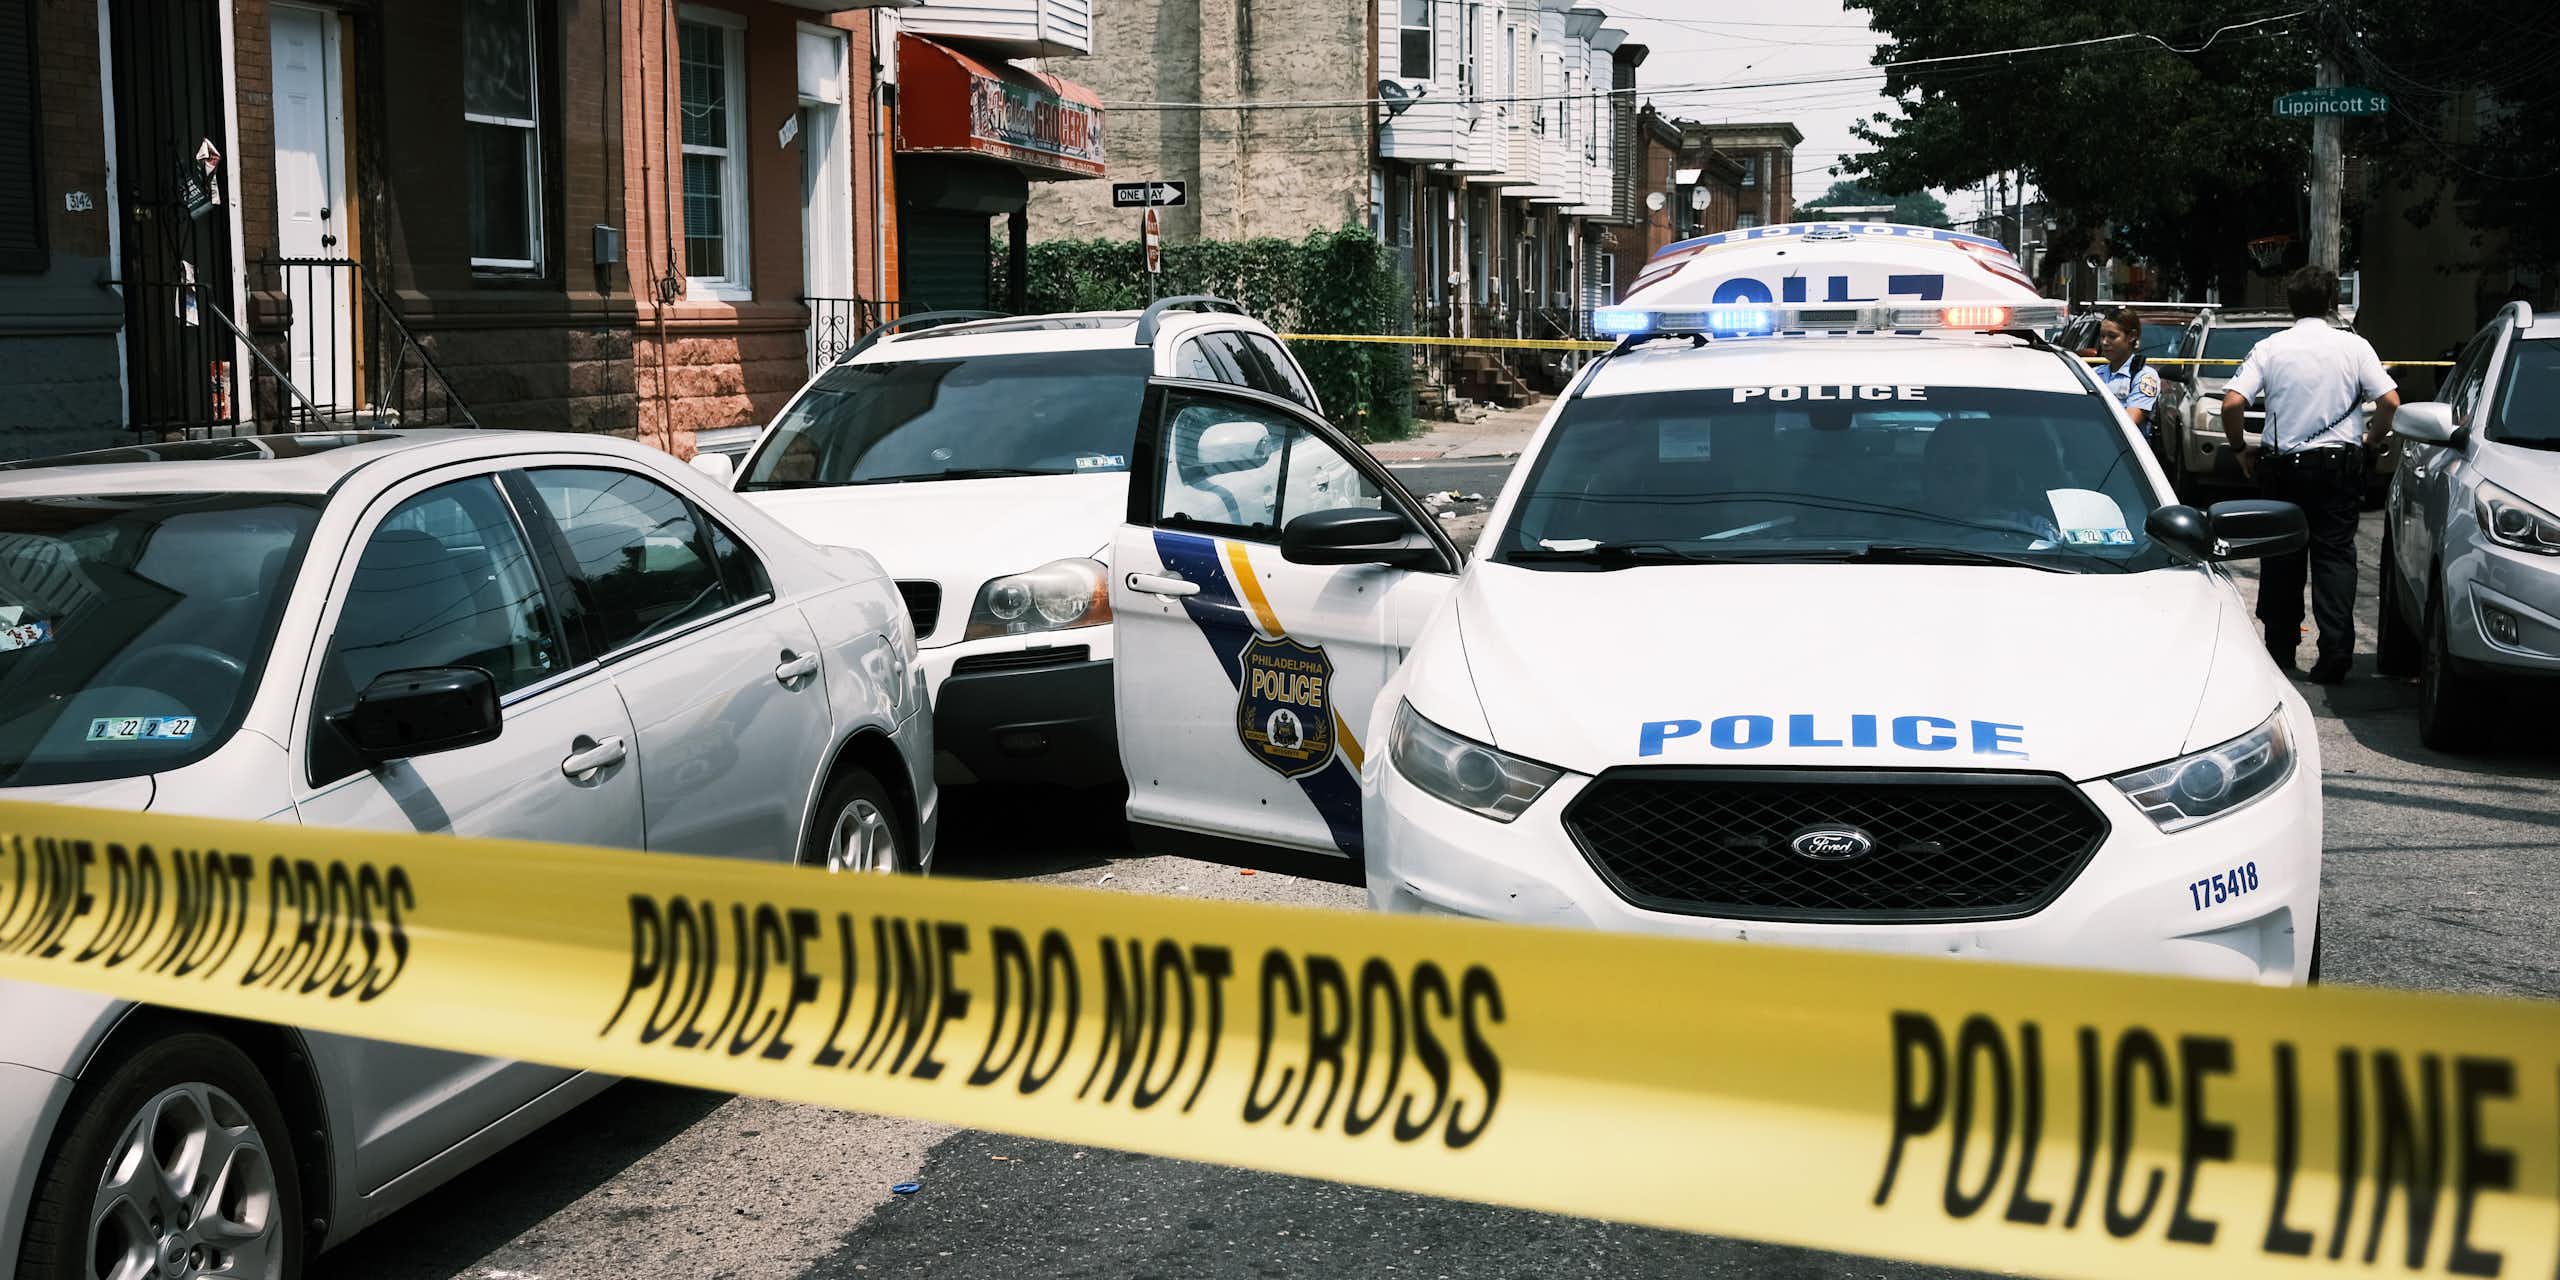 Police tape blocks a street where a person was shot in the Kensington neighborhood of Philadelphia